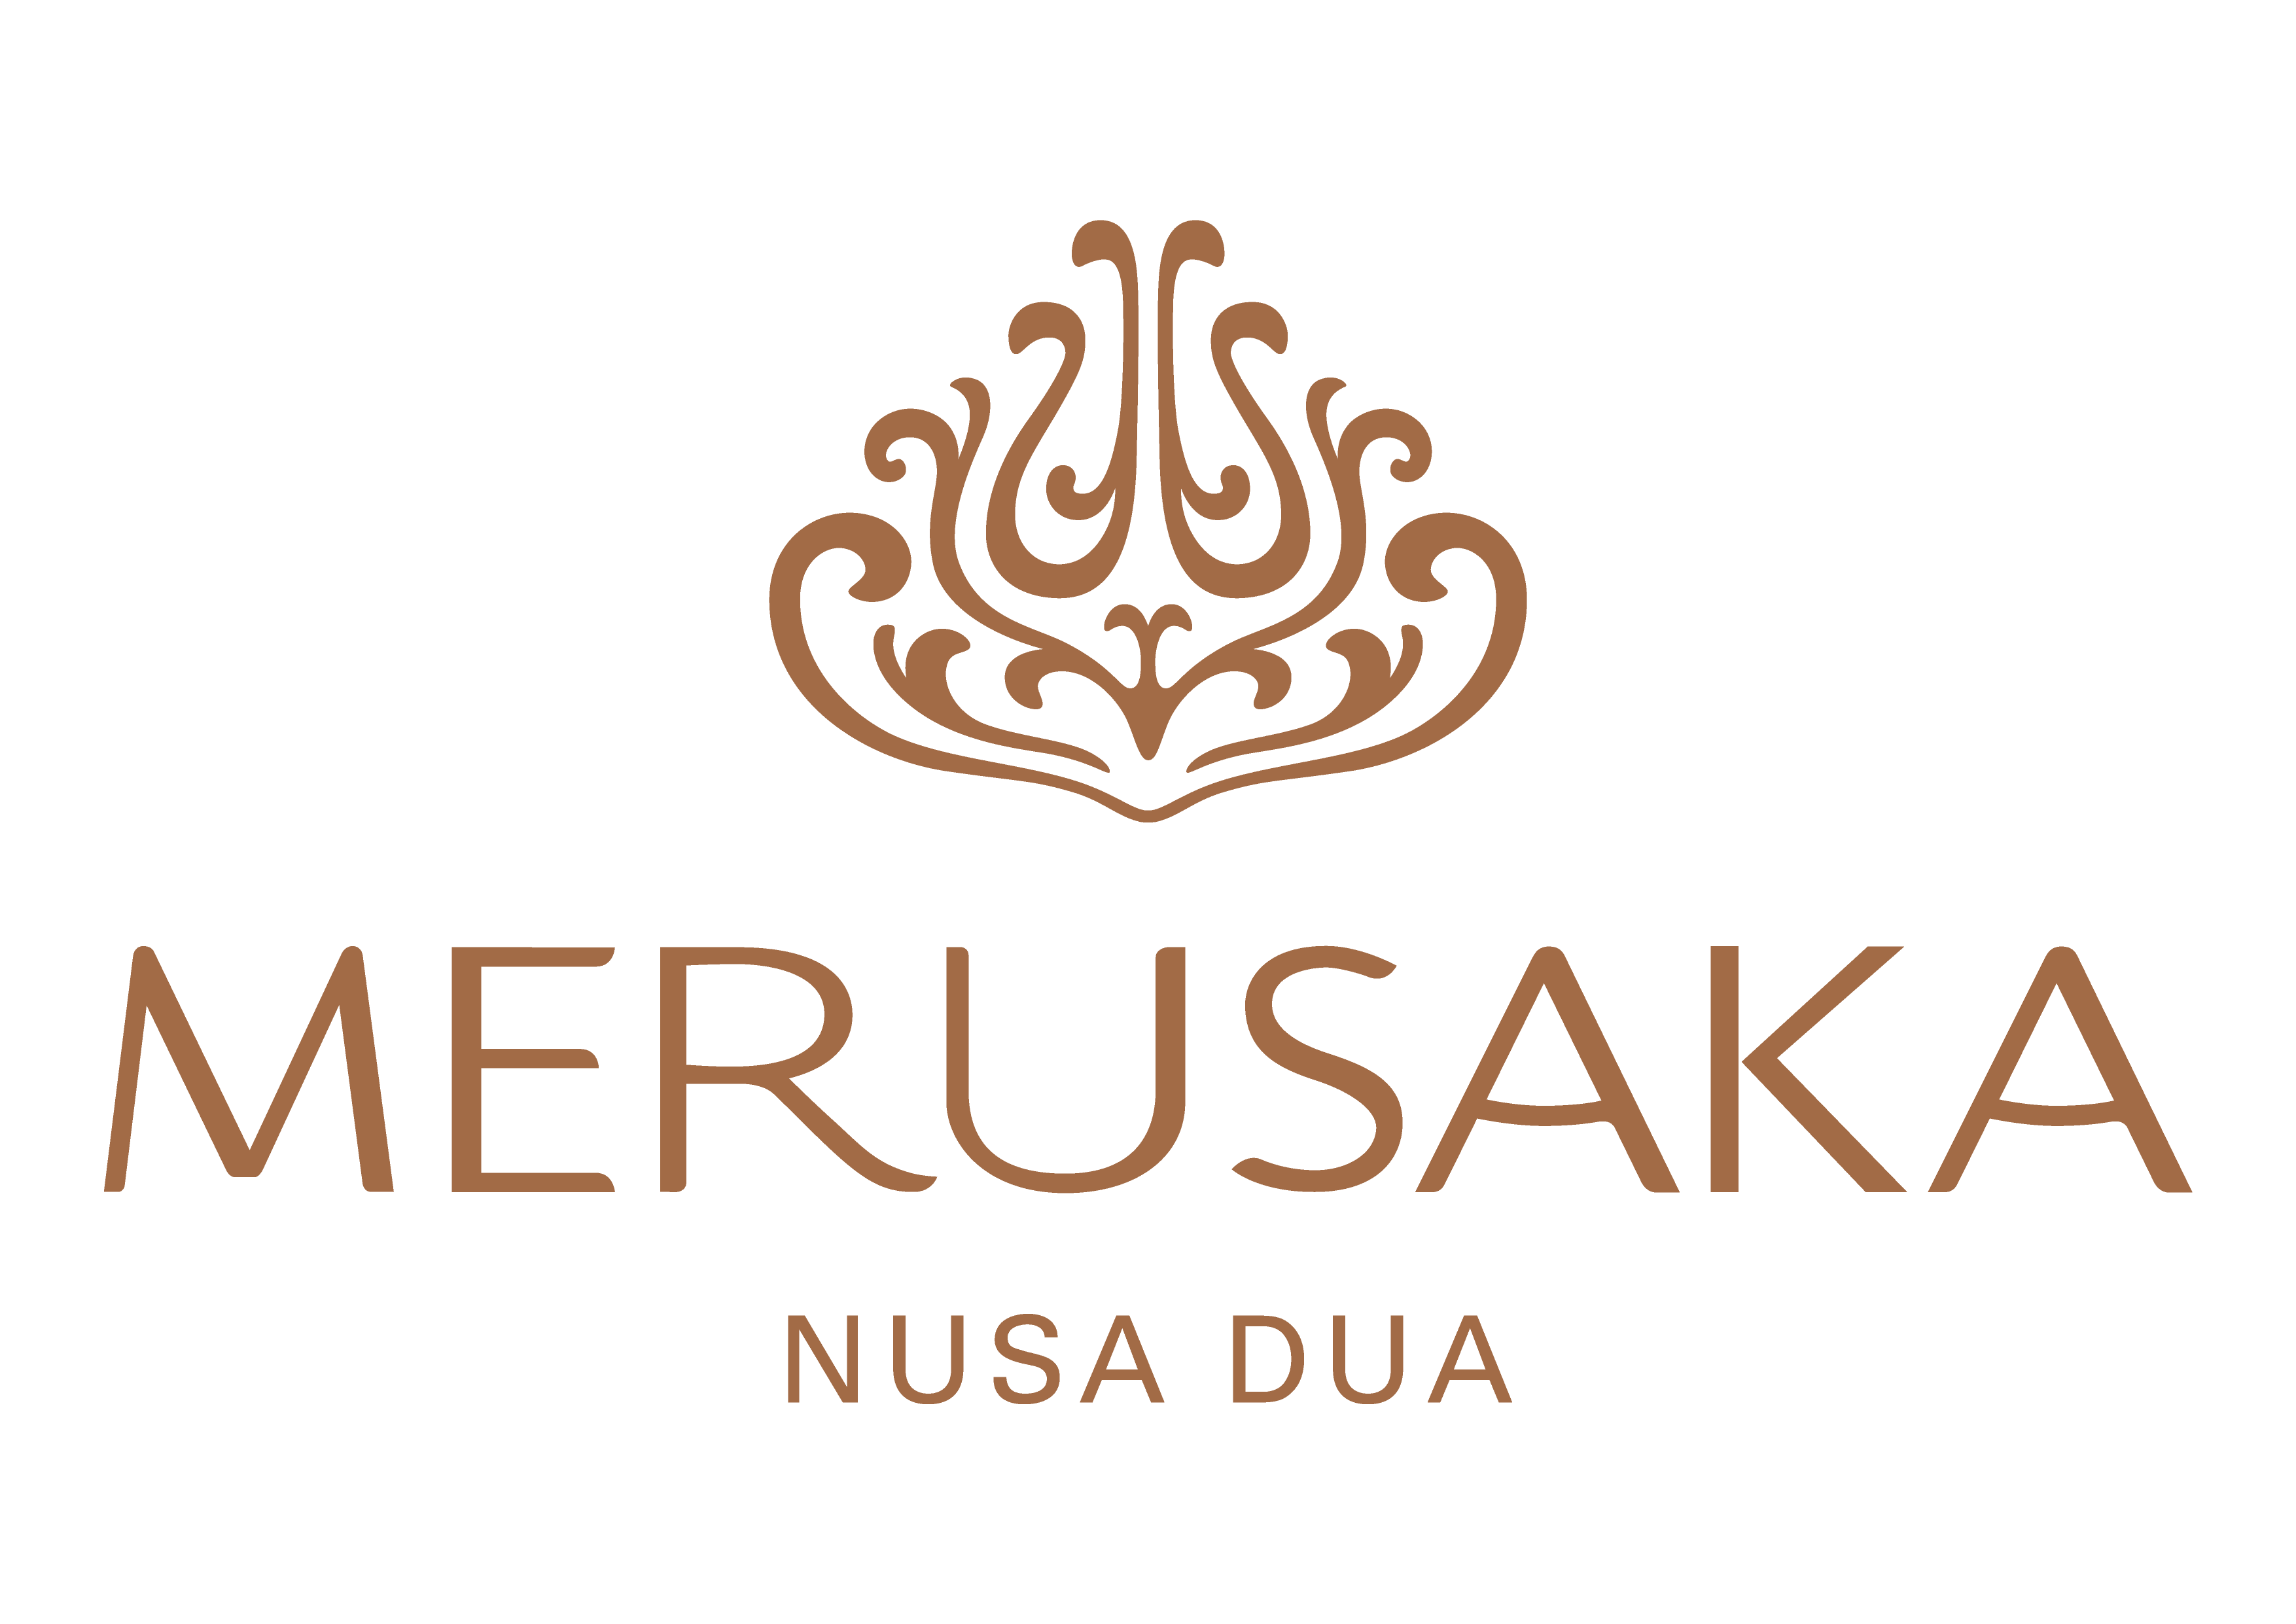 Merusaka nusa dua 5. Бали merusaka Nusa. Merusaka Nusa Dua 5 Бали. Merusaka Nusa Dua (ex. Inaya Putri Bali Resort) 5*. Merusaka Nusa Dua 5* (Нуса-Дуа).